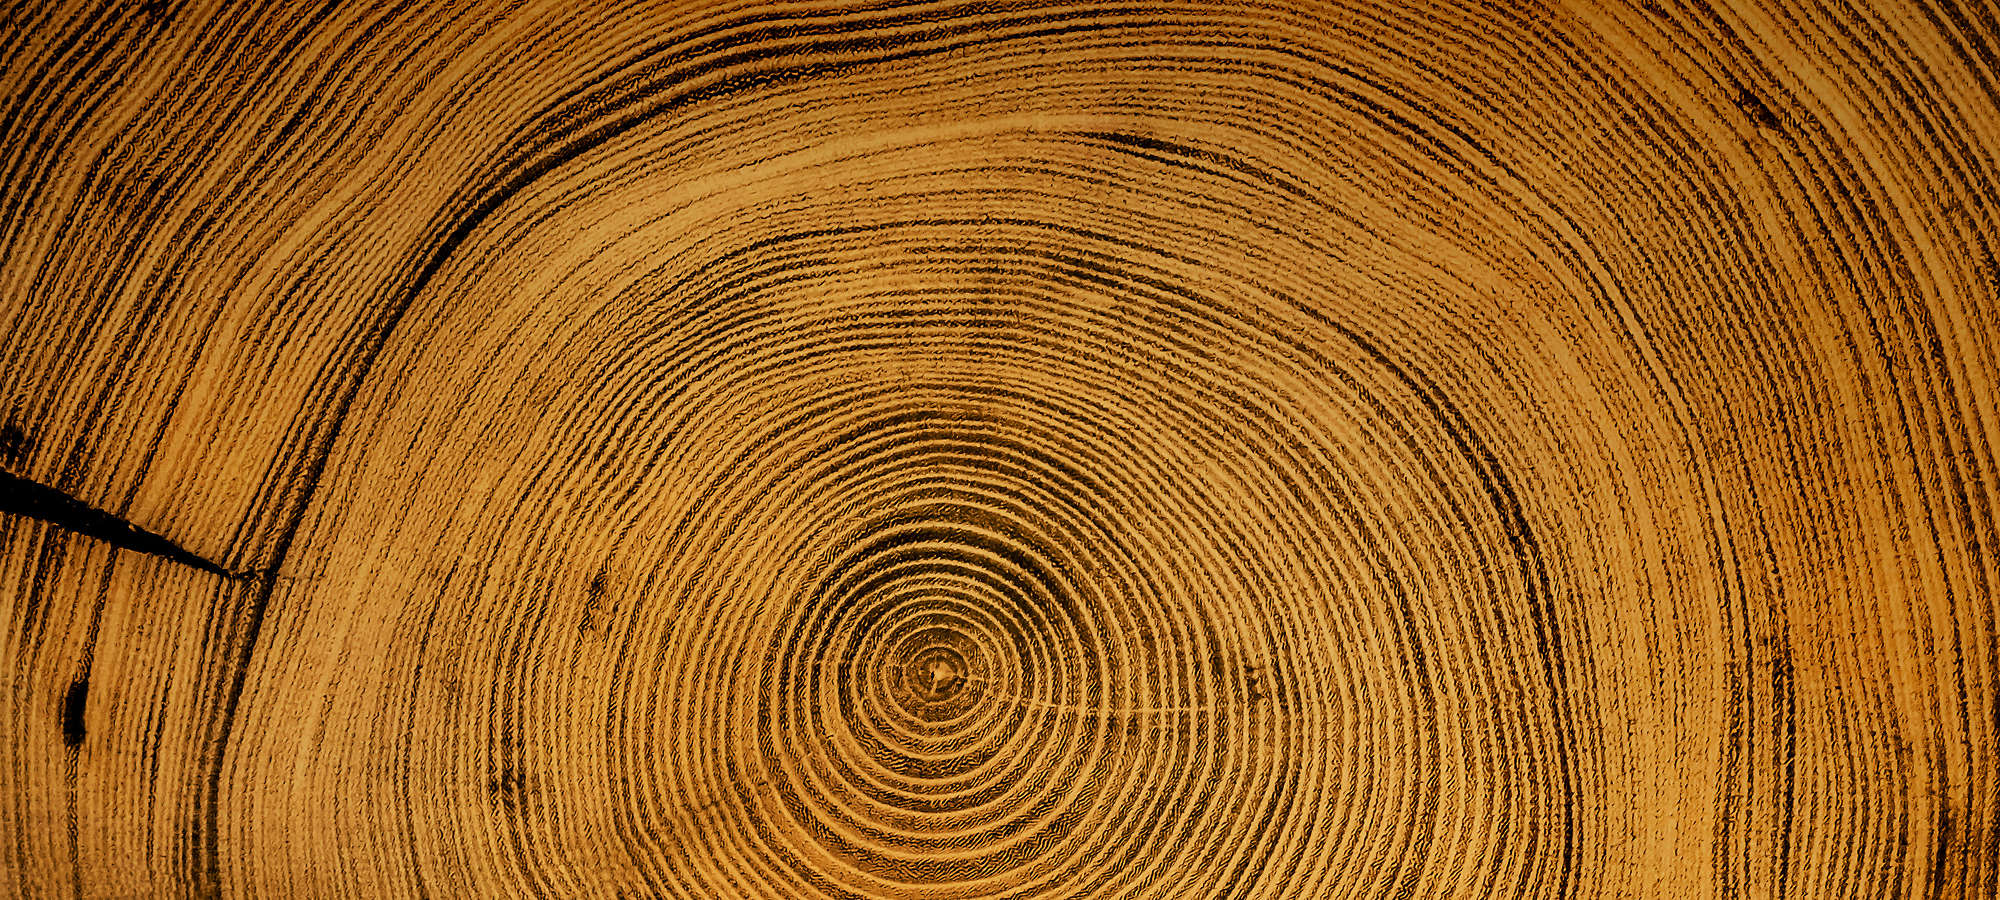 Wooden spiral tree trunk